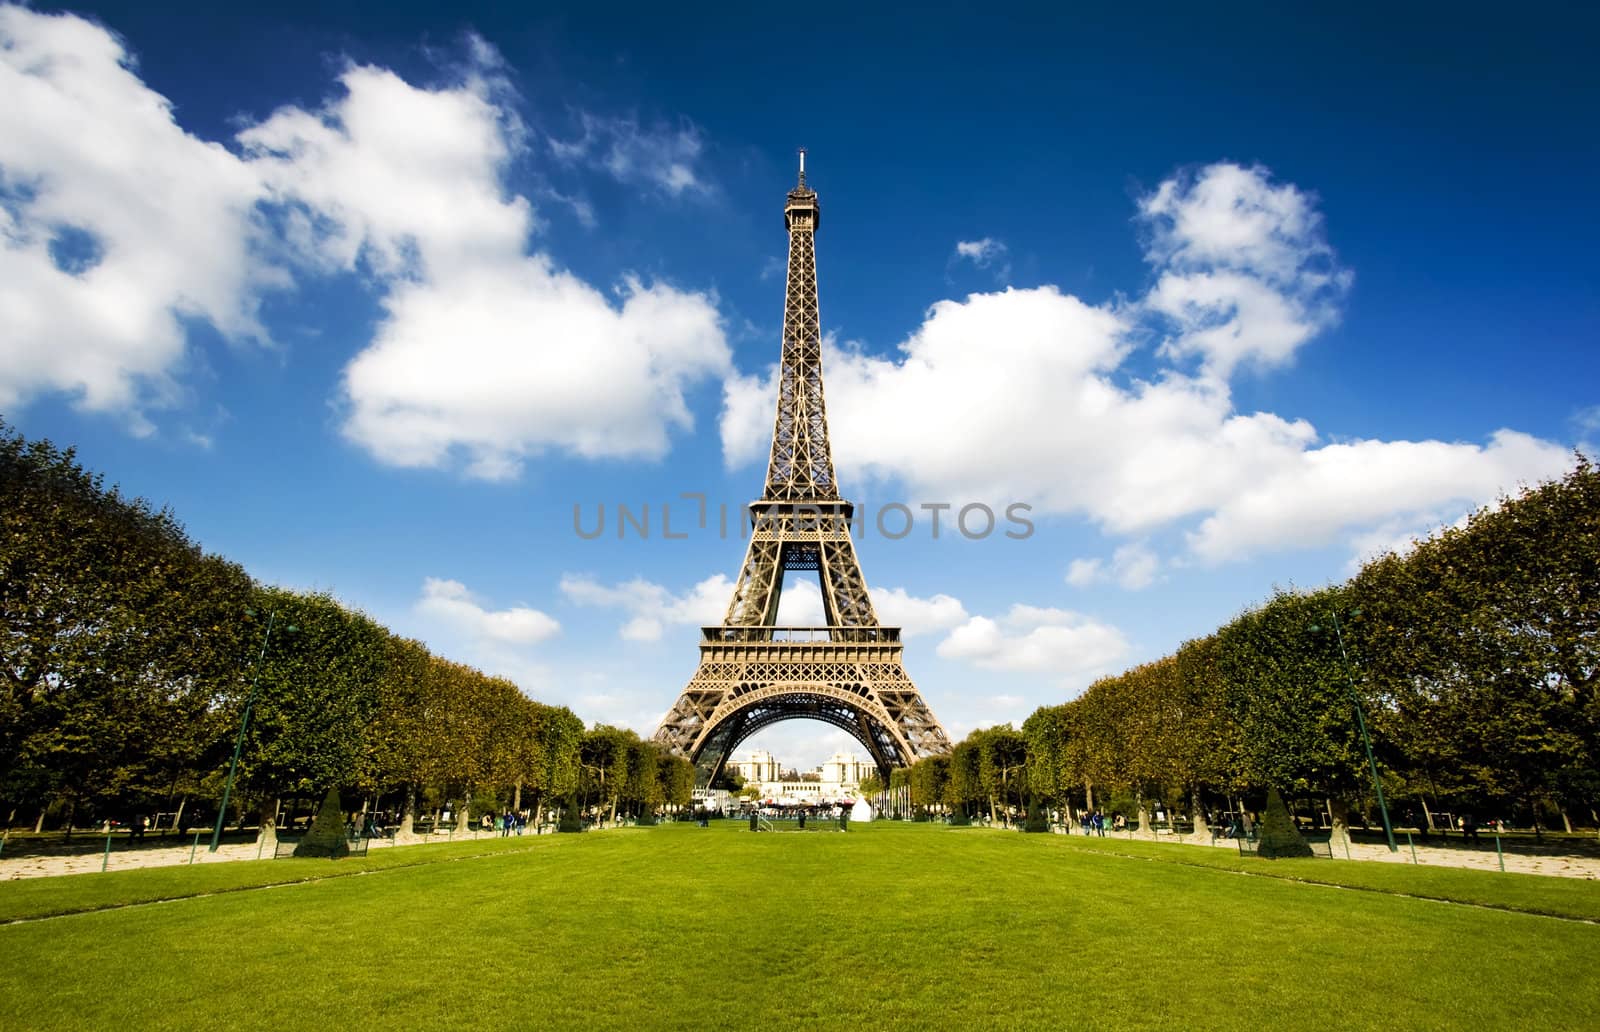 Beautiful Eiffel tower by domencolja